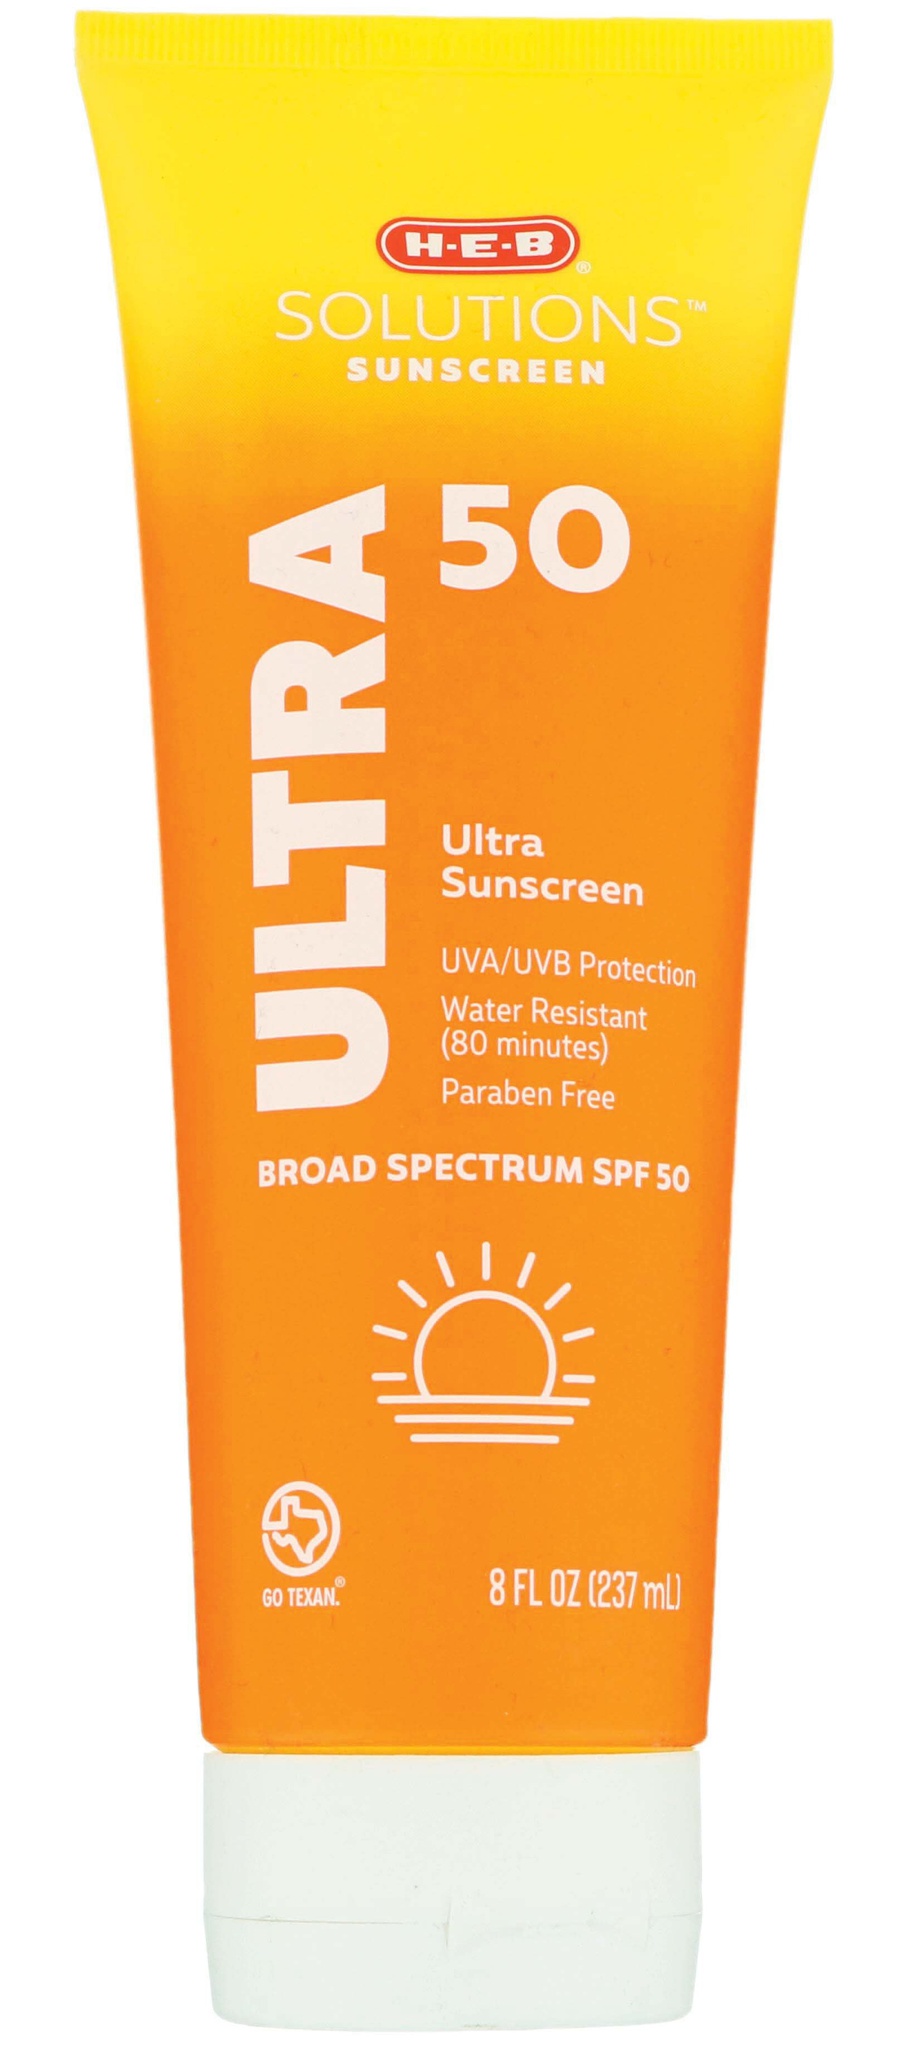 H-E-B Ultra SunScreen SPF 50